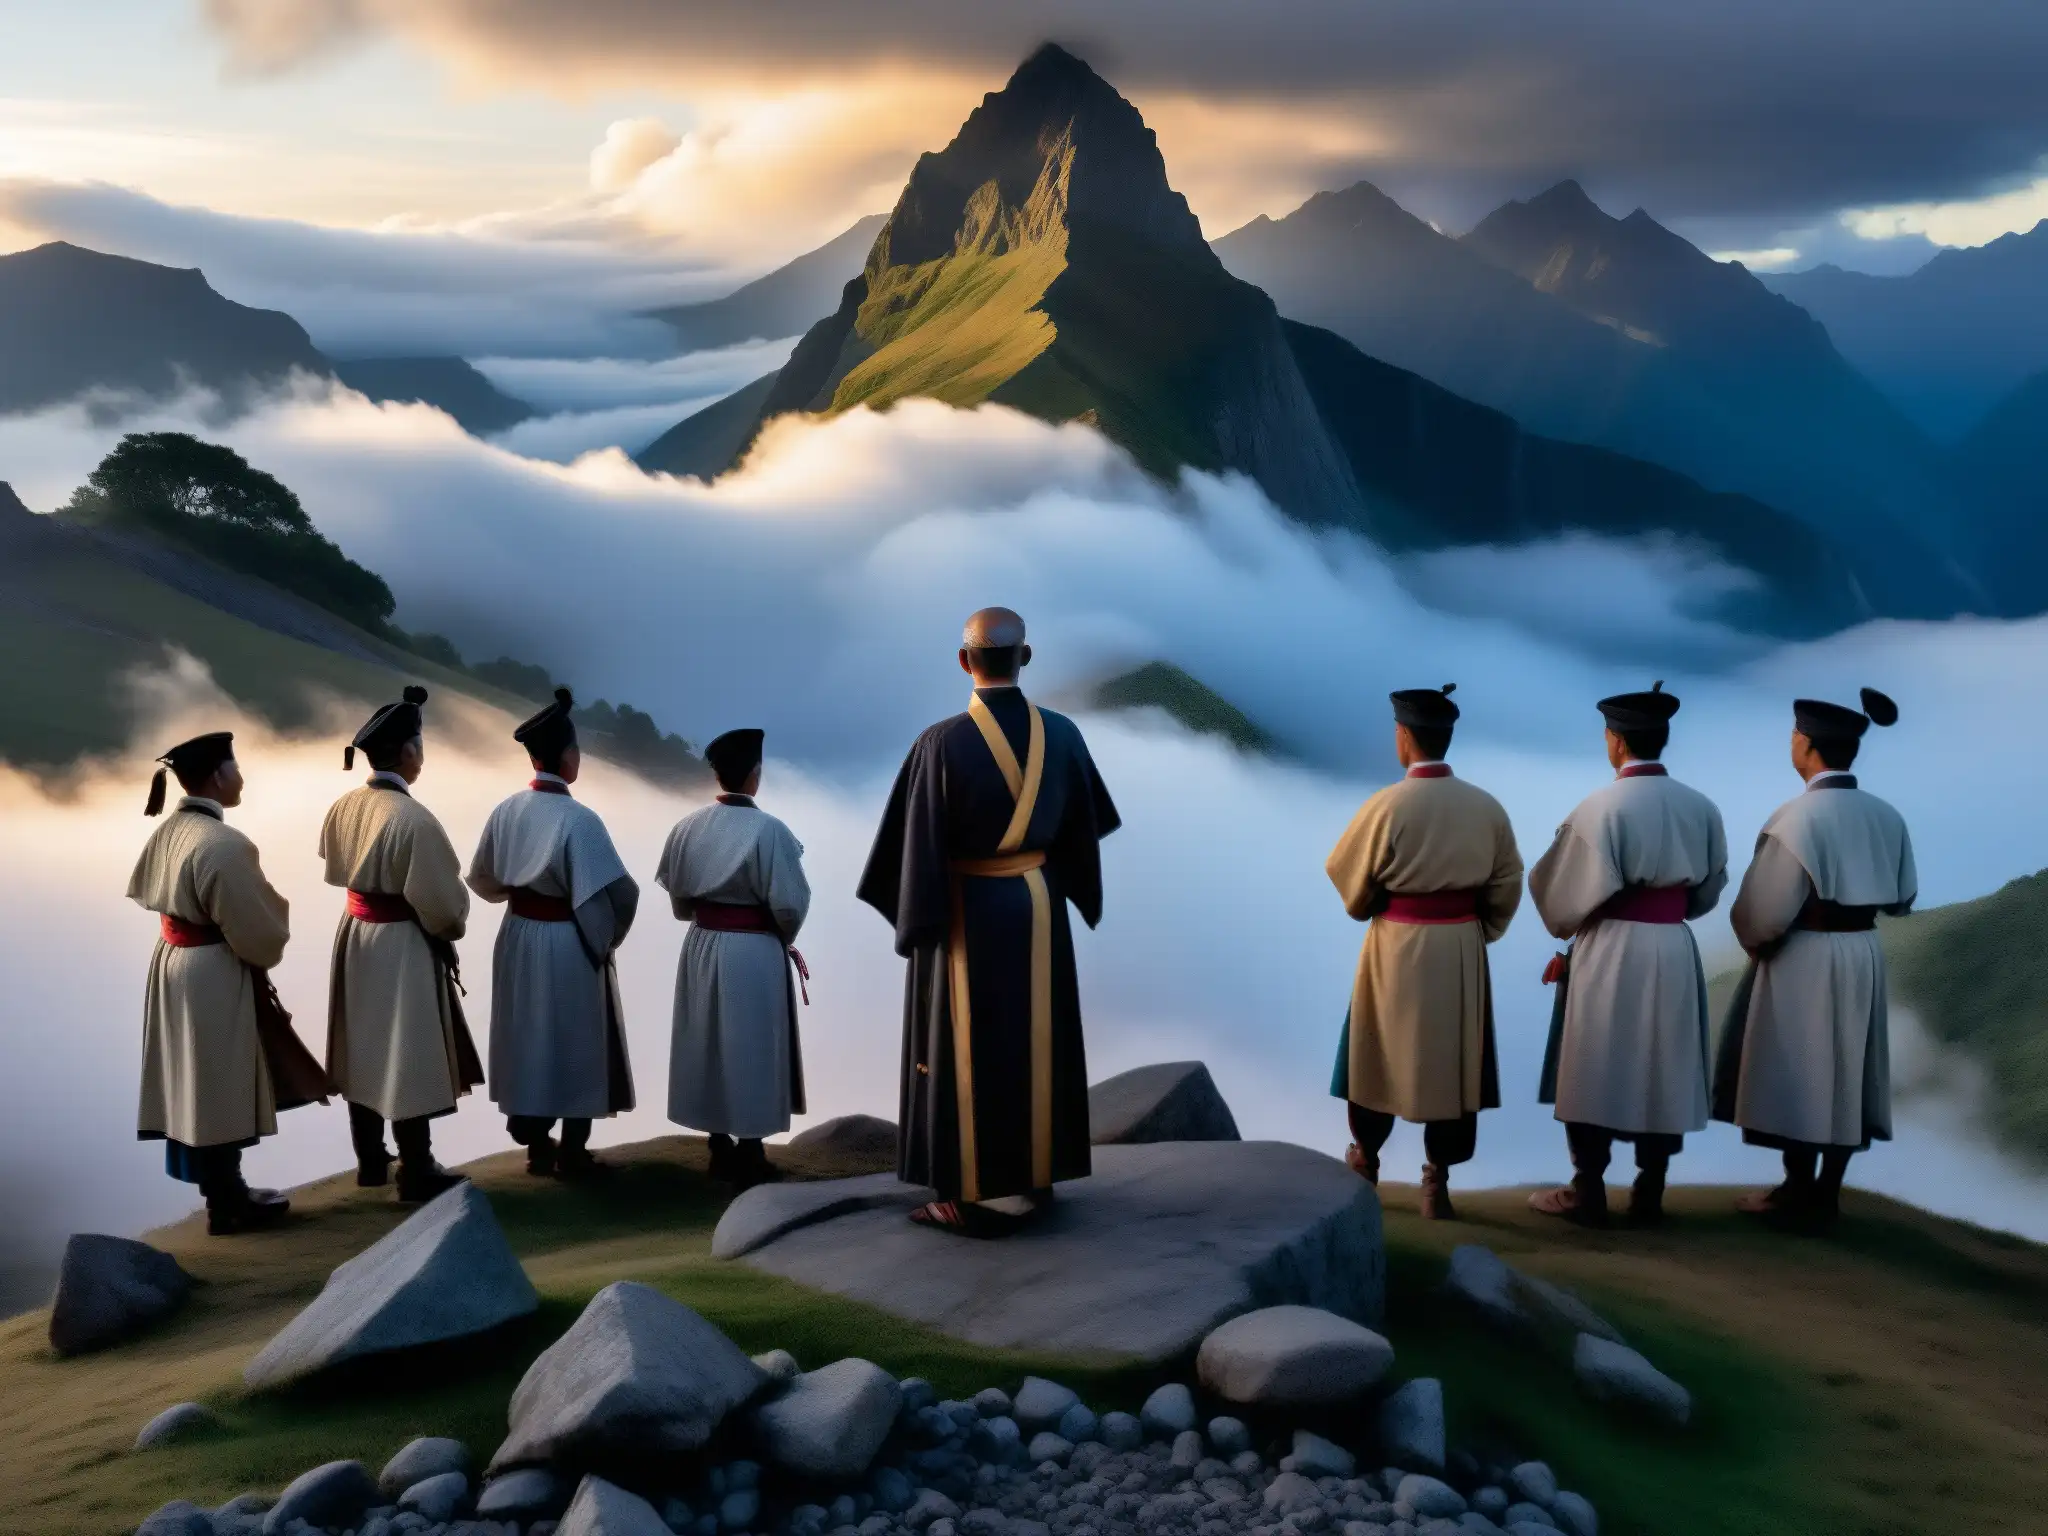 Figuras en túnicas realizan rituales misteriosos en la neblinosa montaña Akakura al amanecer